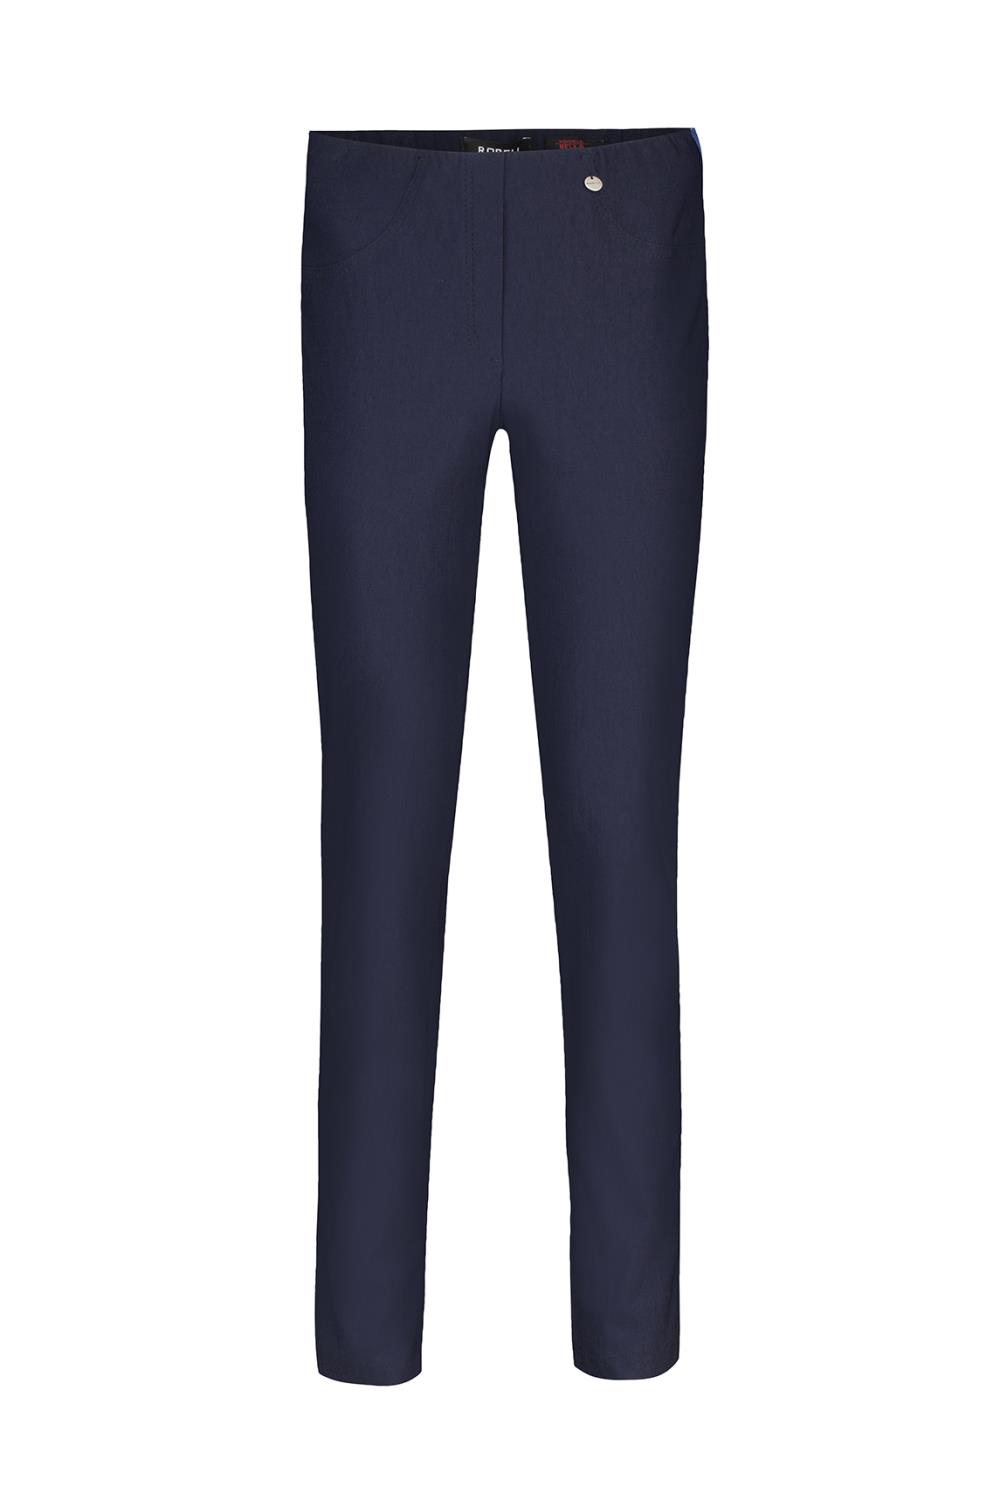 Robell Bella bukse, 78 cm, marineblå